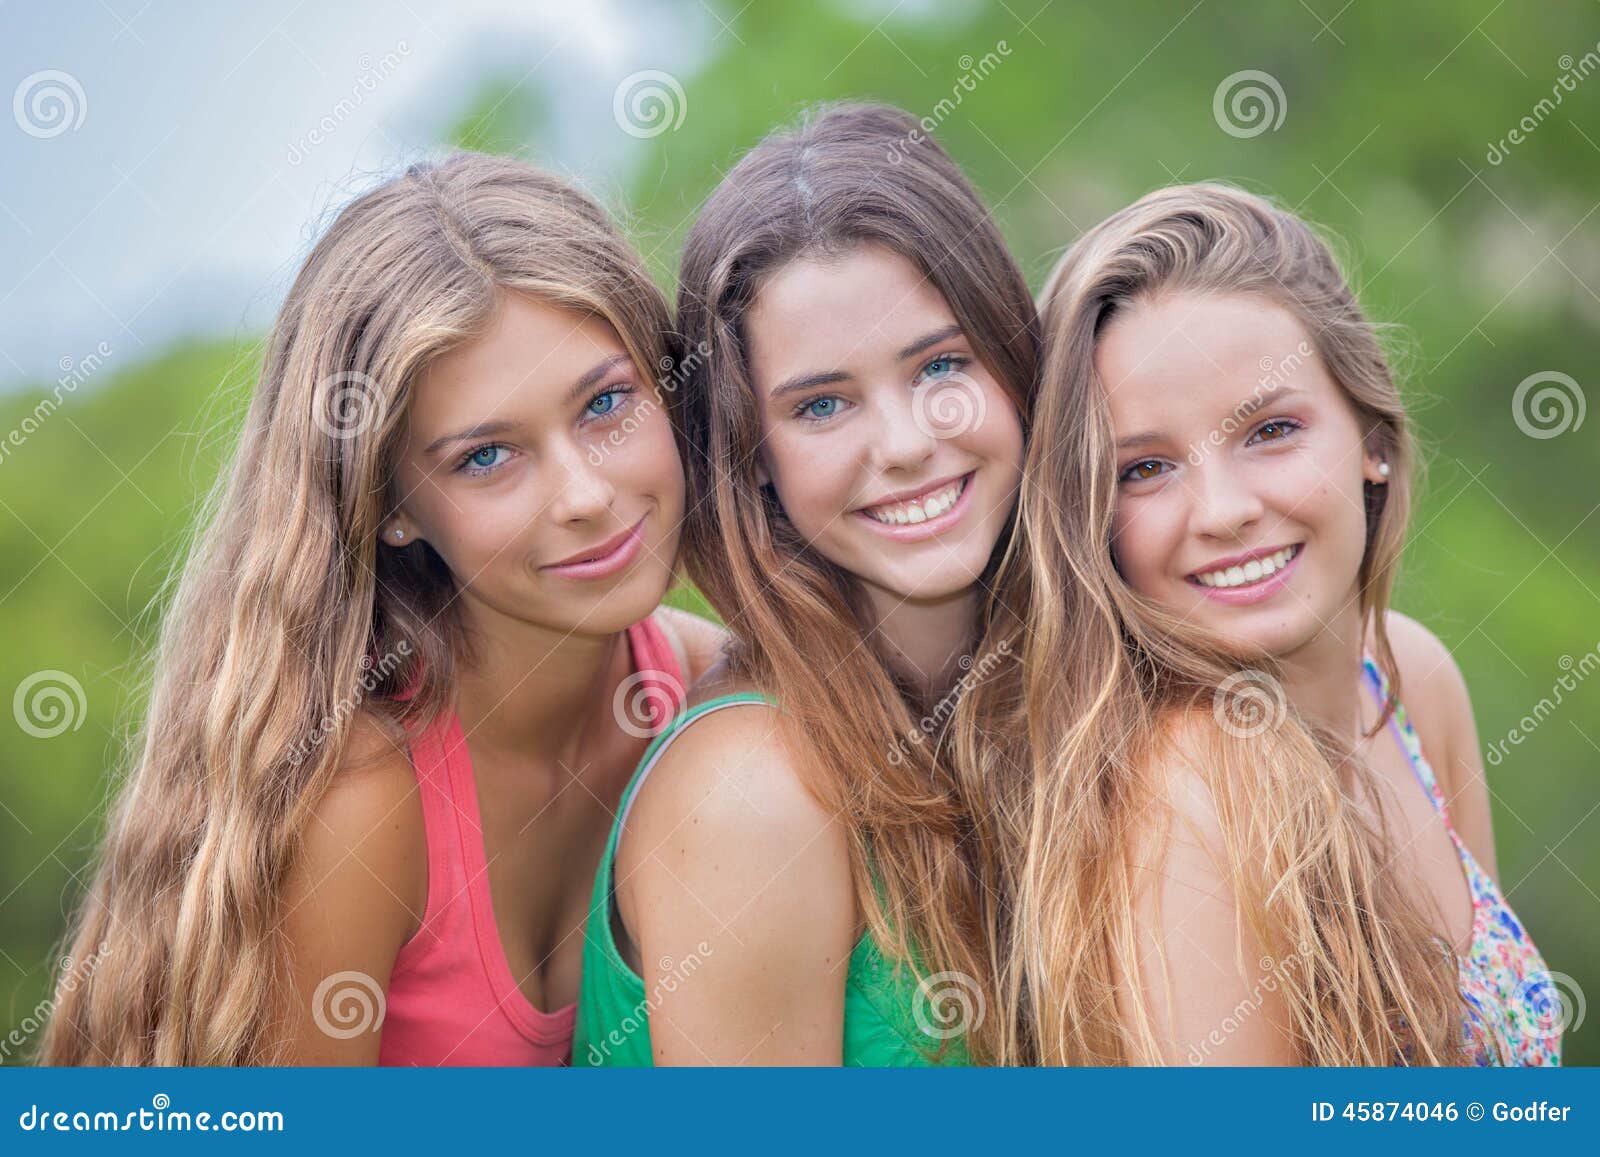 Young Teen Girls Pics